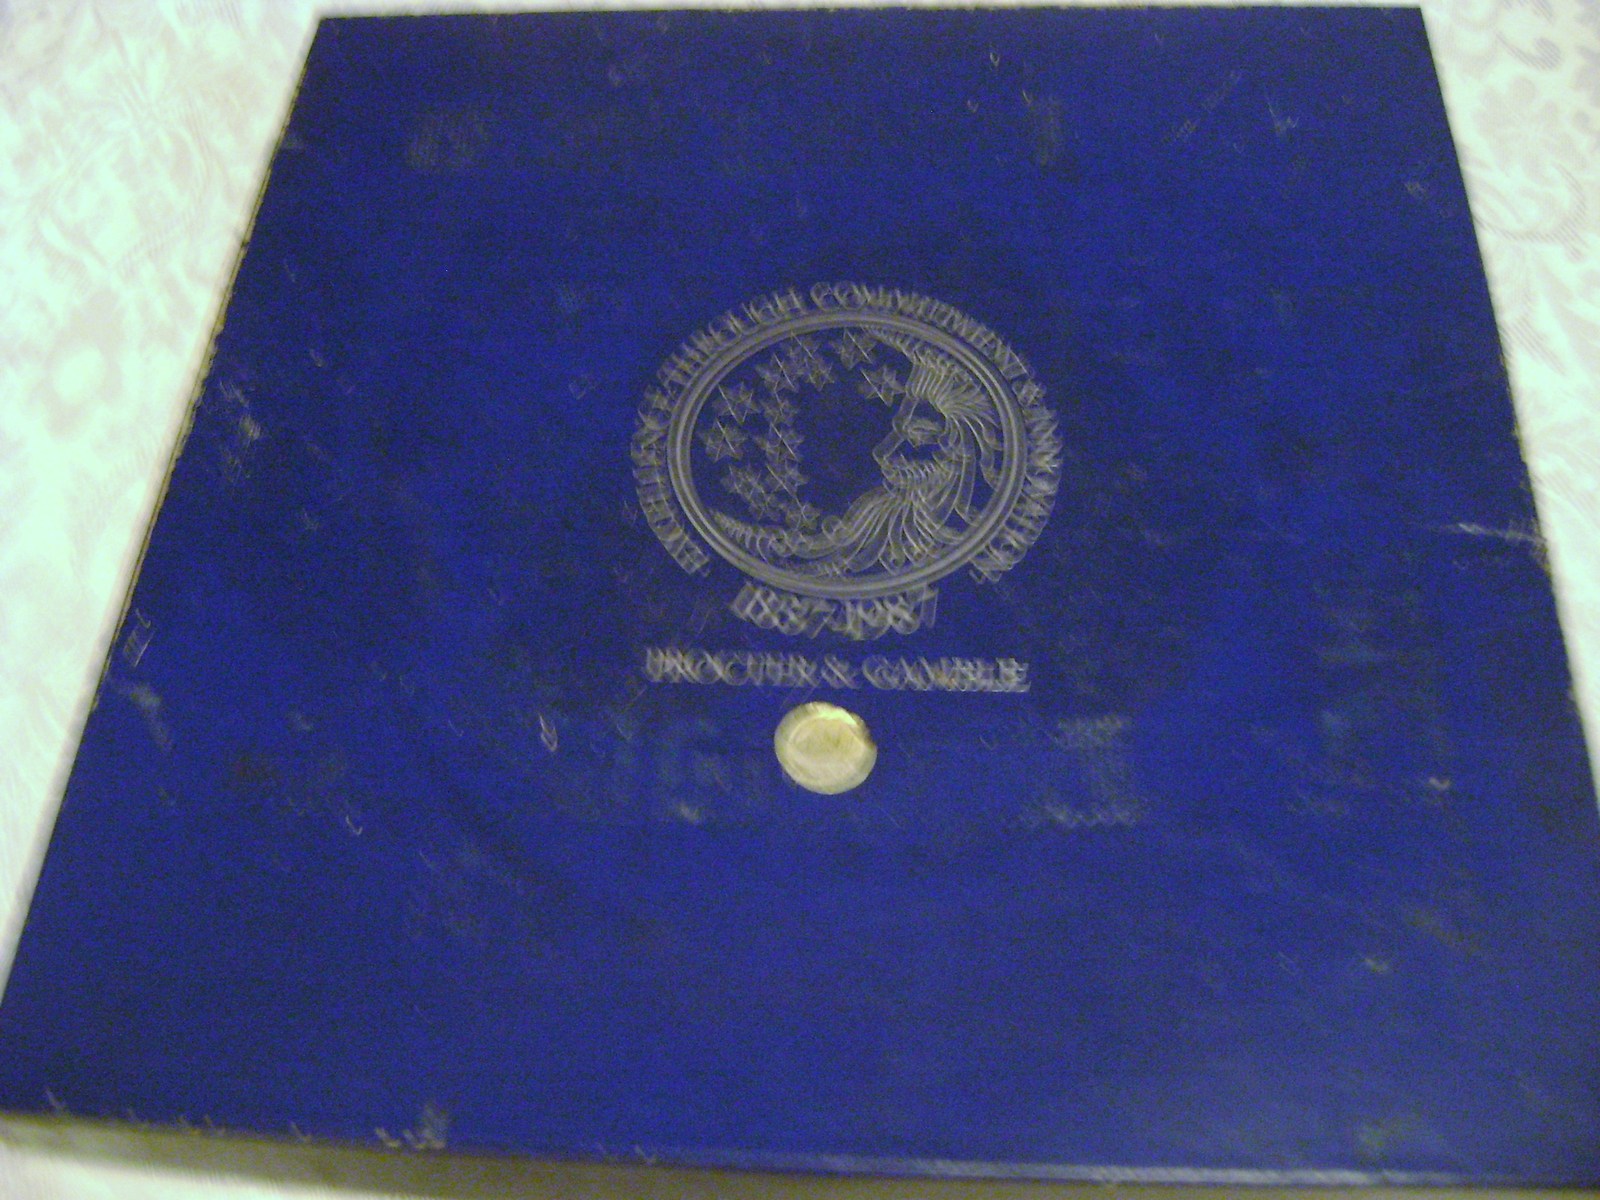 Proctor & Gamble Commemorative Platter - $10.00